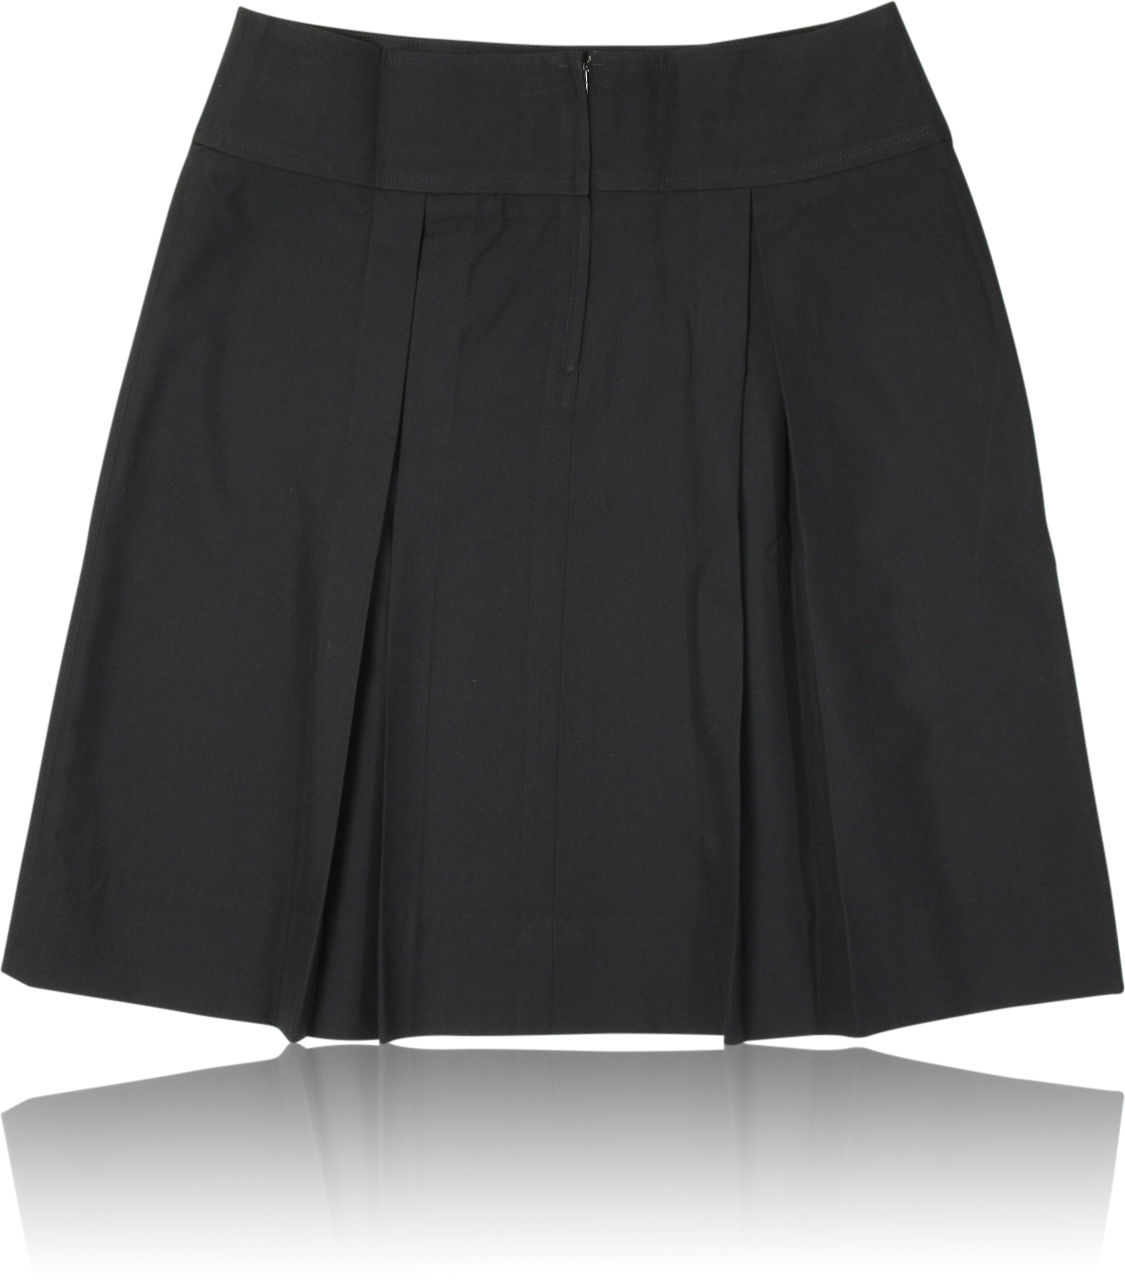 Skirt Formal OLSCC - Wearitto